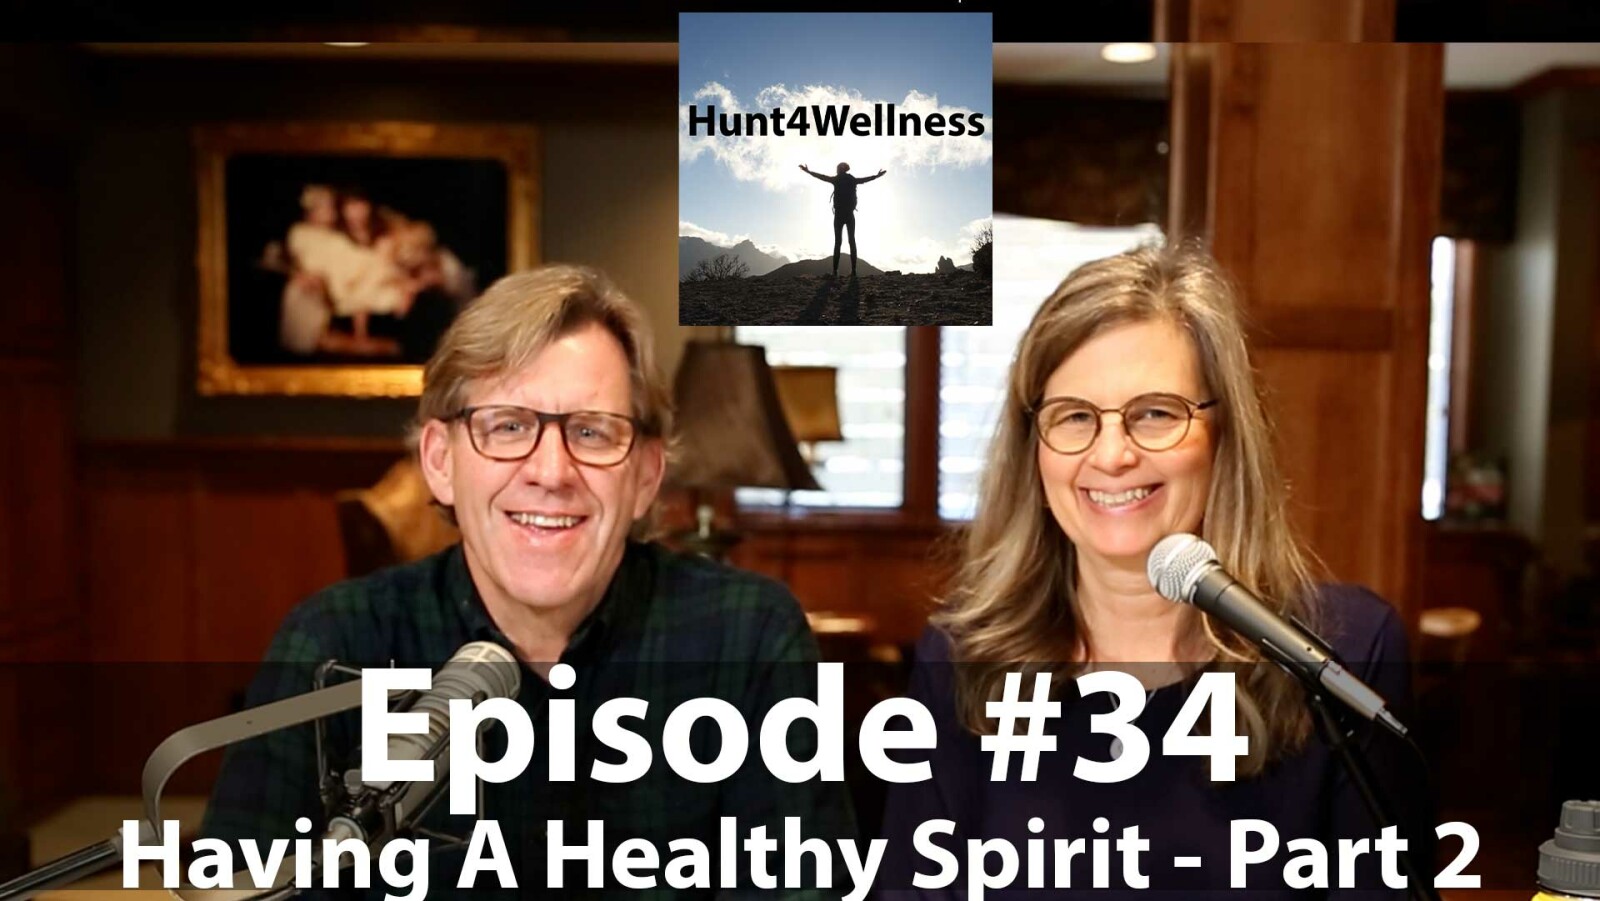 Episode #34 - Having a Healthy Spirit Part 2